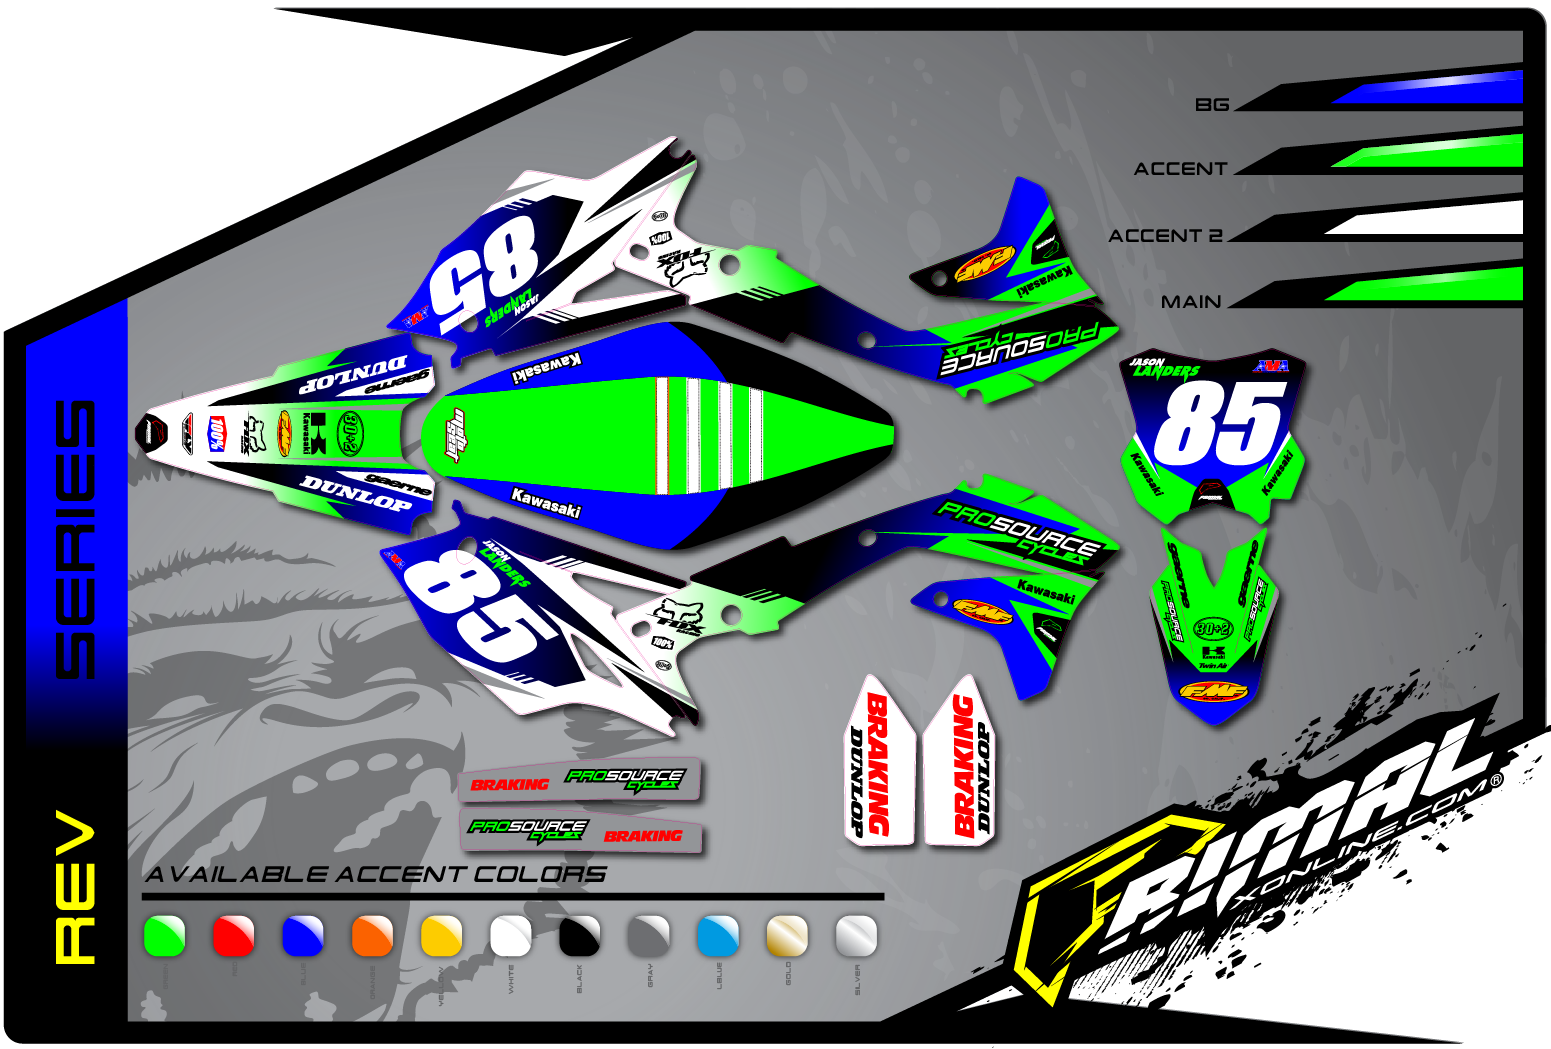 primal-x-motorsports-mx-graphics-motocross-graphics-kxf-450-kxf-250-kx125-kx-250-kx-rev-series